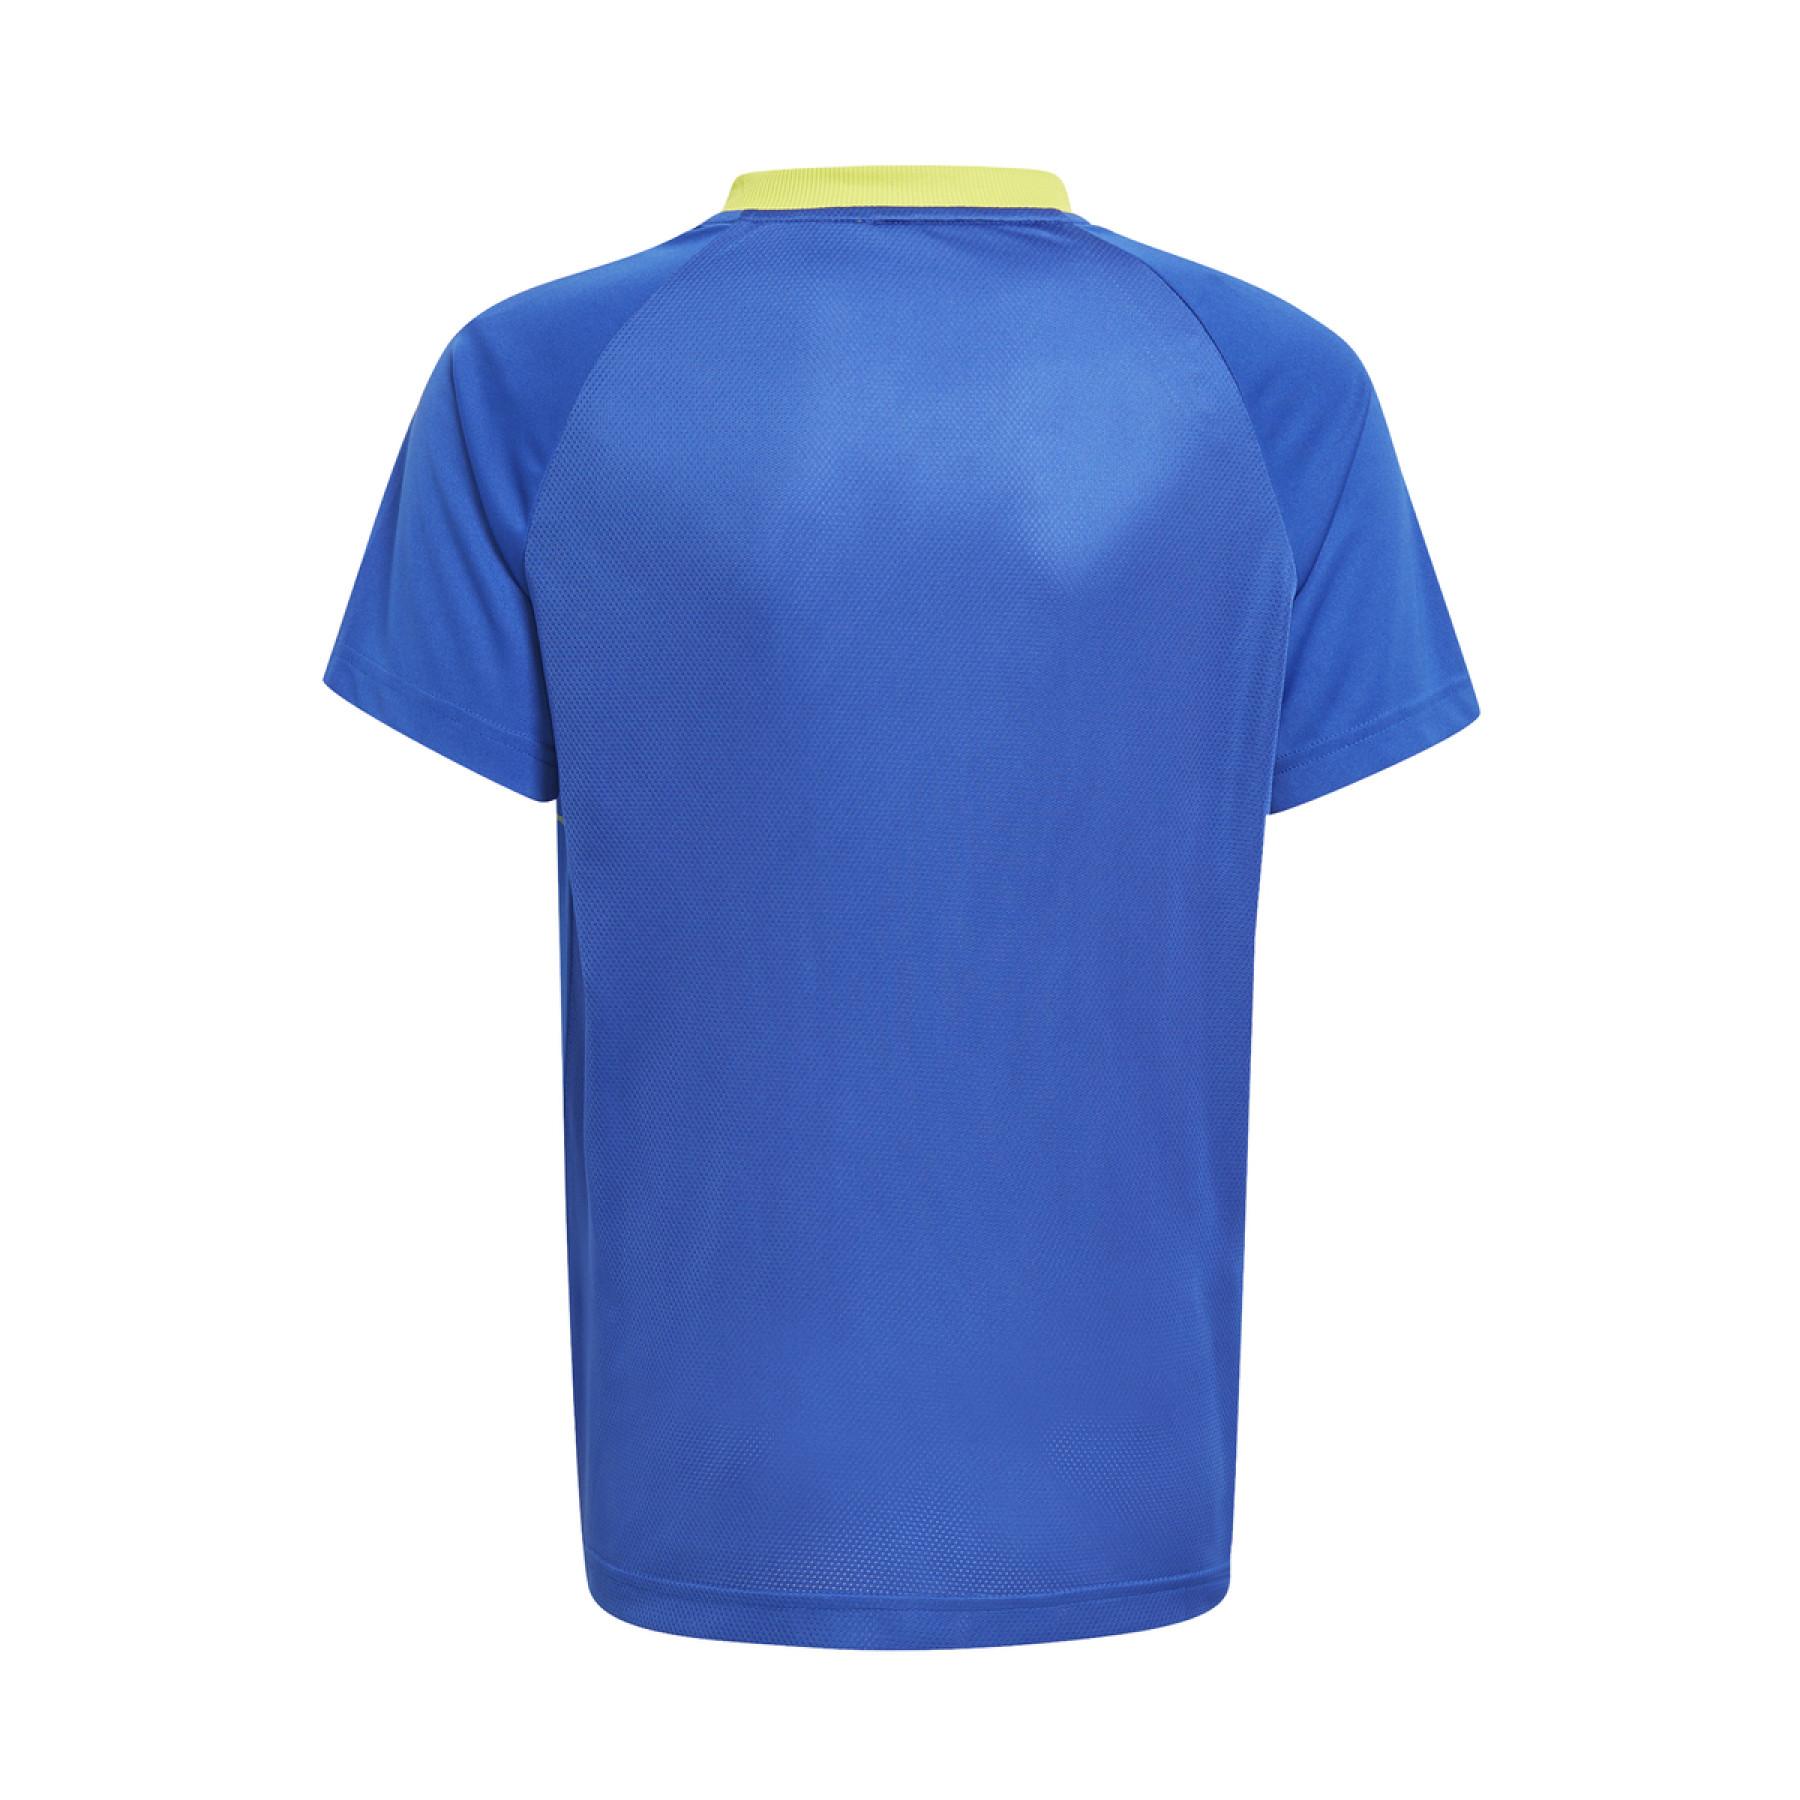 Kinder-T-Shirt adidas Predator Football-Inspired